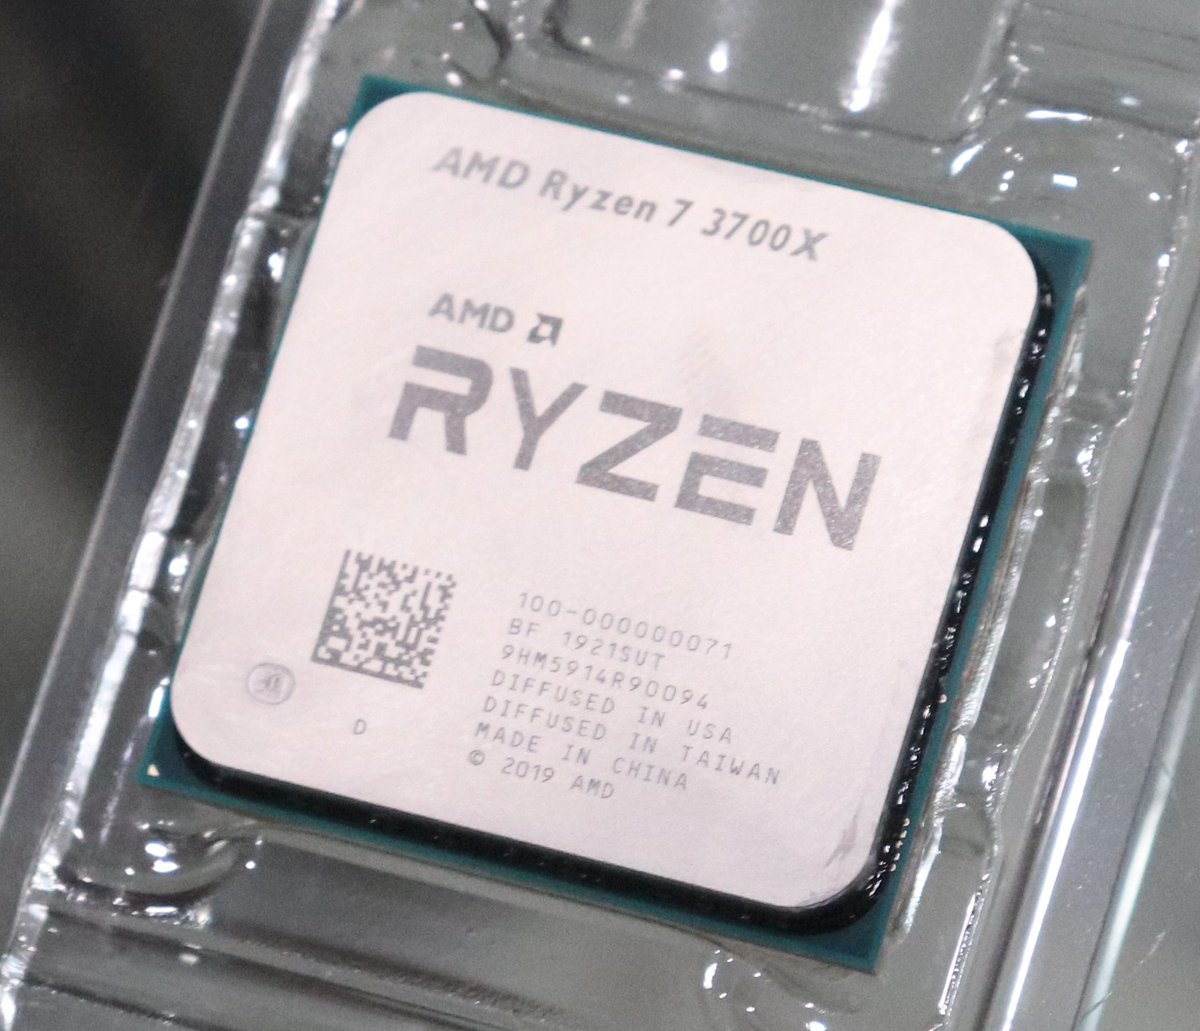 Райзен какой сокет. Процессор AMD Ryzen 7 3700x. Процессор AMD Ryzen 7 3700x am4 OEM. AMD Ryzen 7 3700x 8-Core Processor. Процессор AMD Ryzen 9 3900 am4.